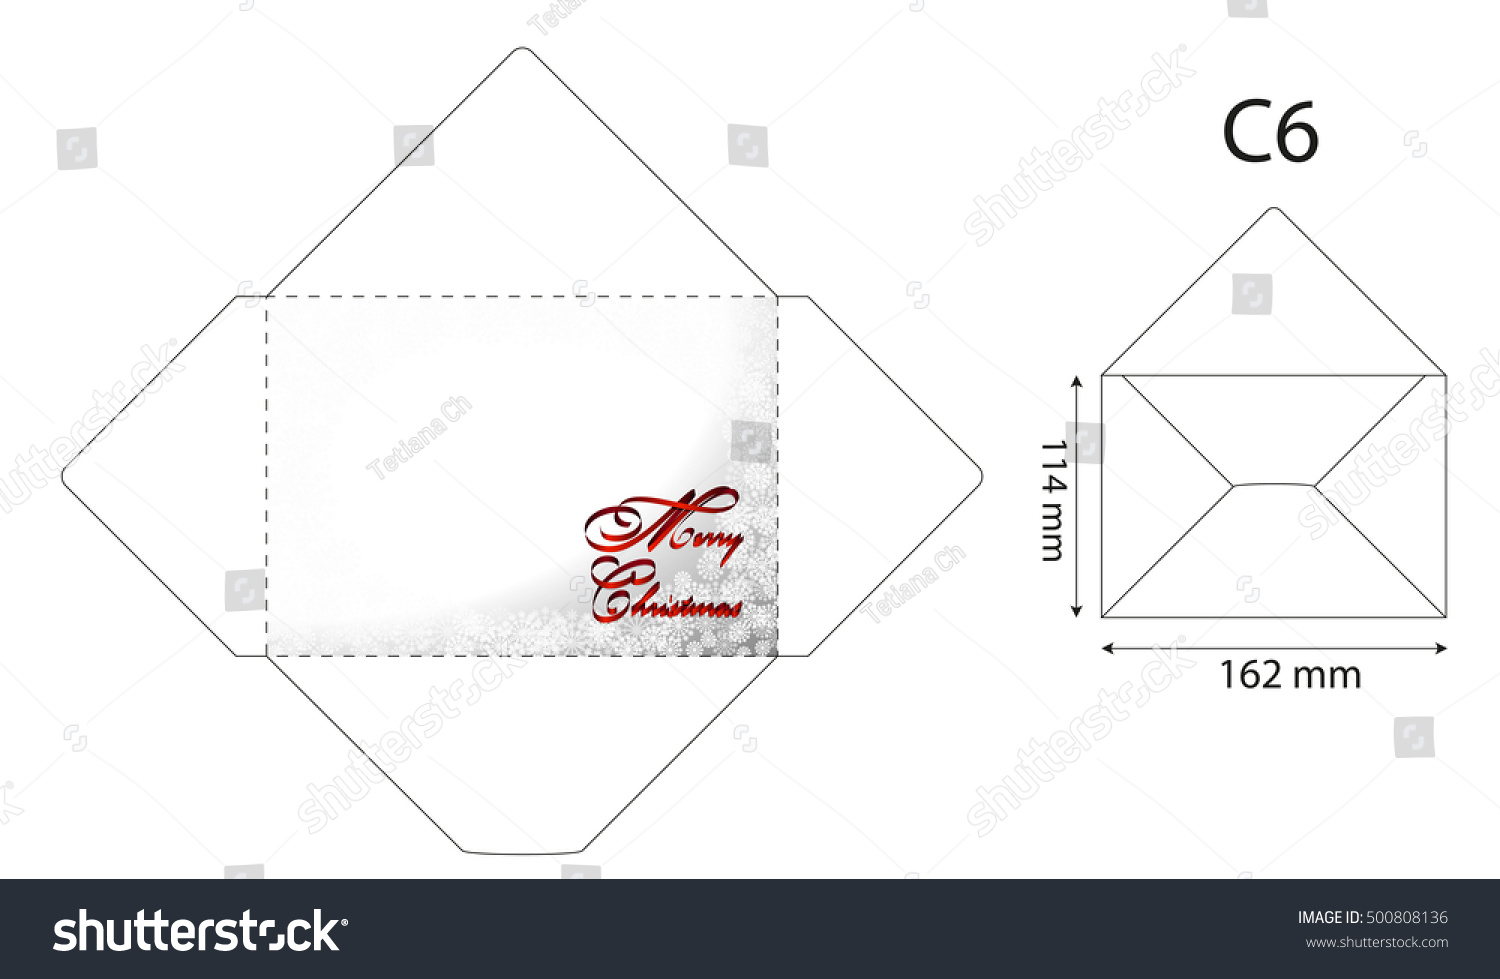 Макет конверта с размерами